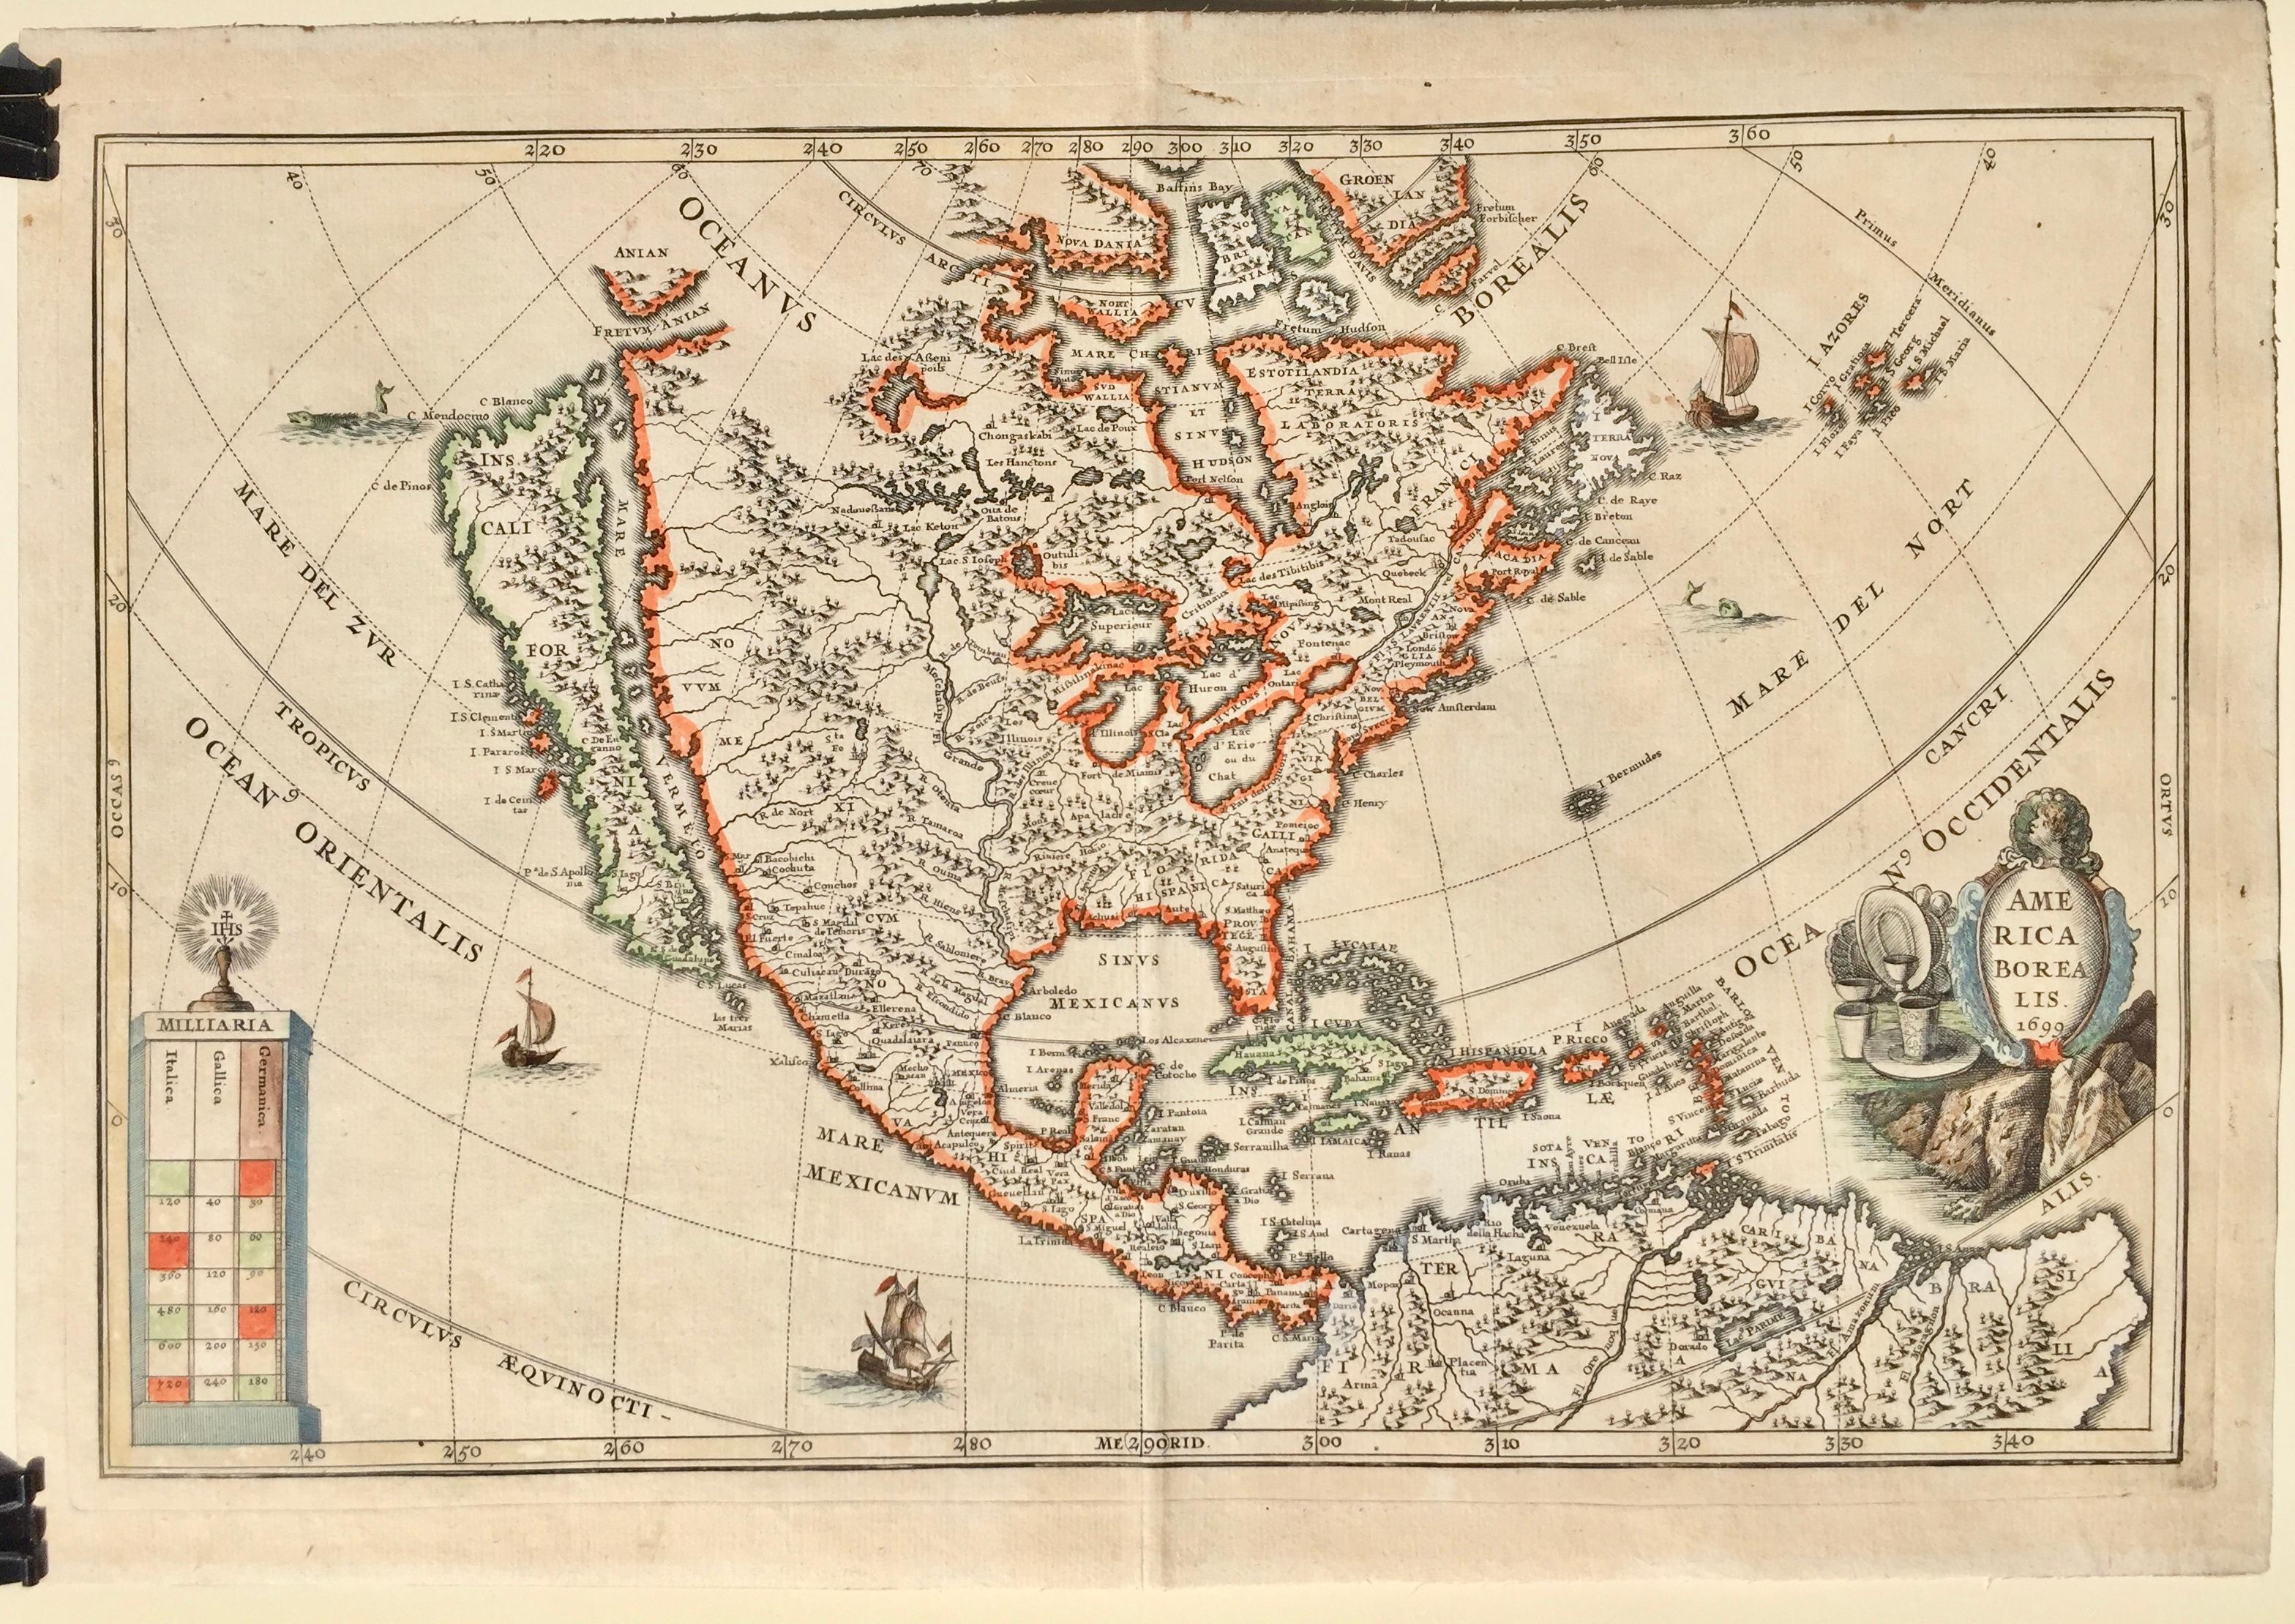 AMERICA BOREALIS (California As An Island) - Print by Heinrich Scherer